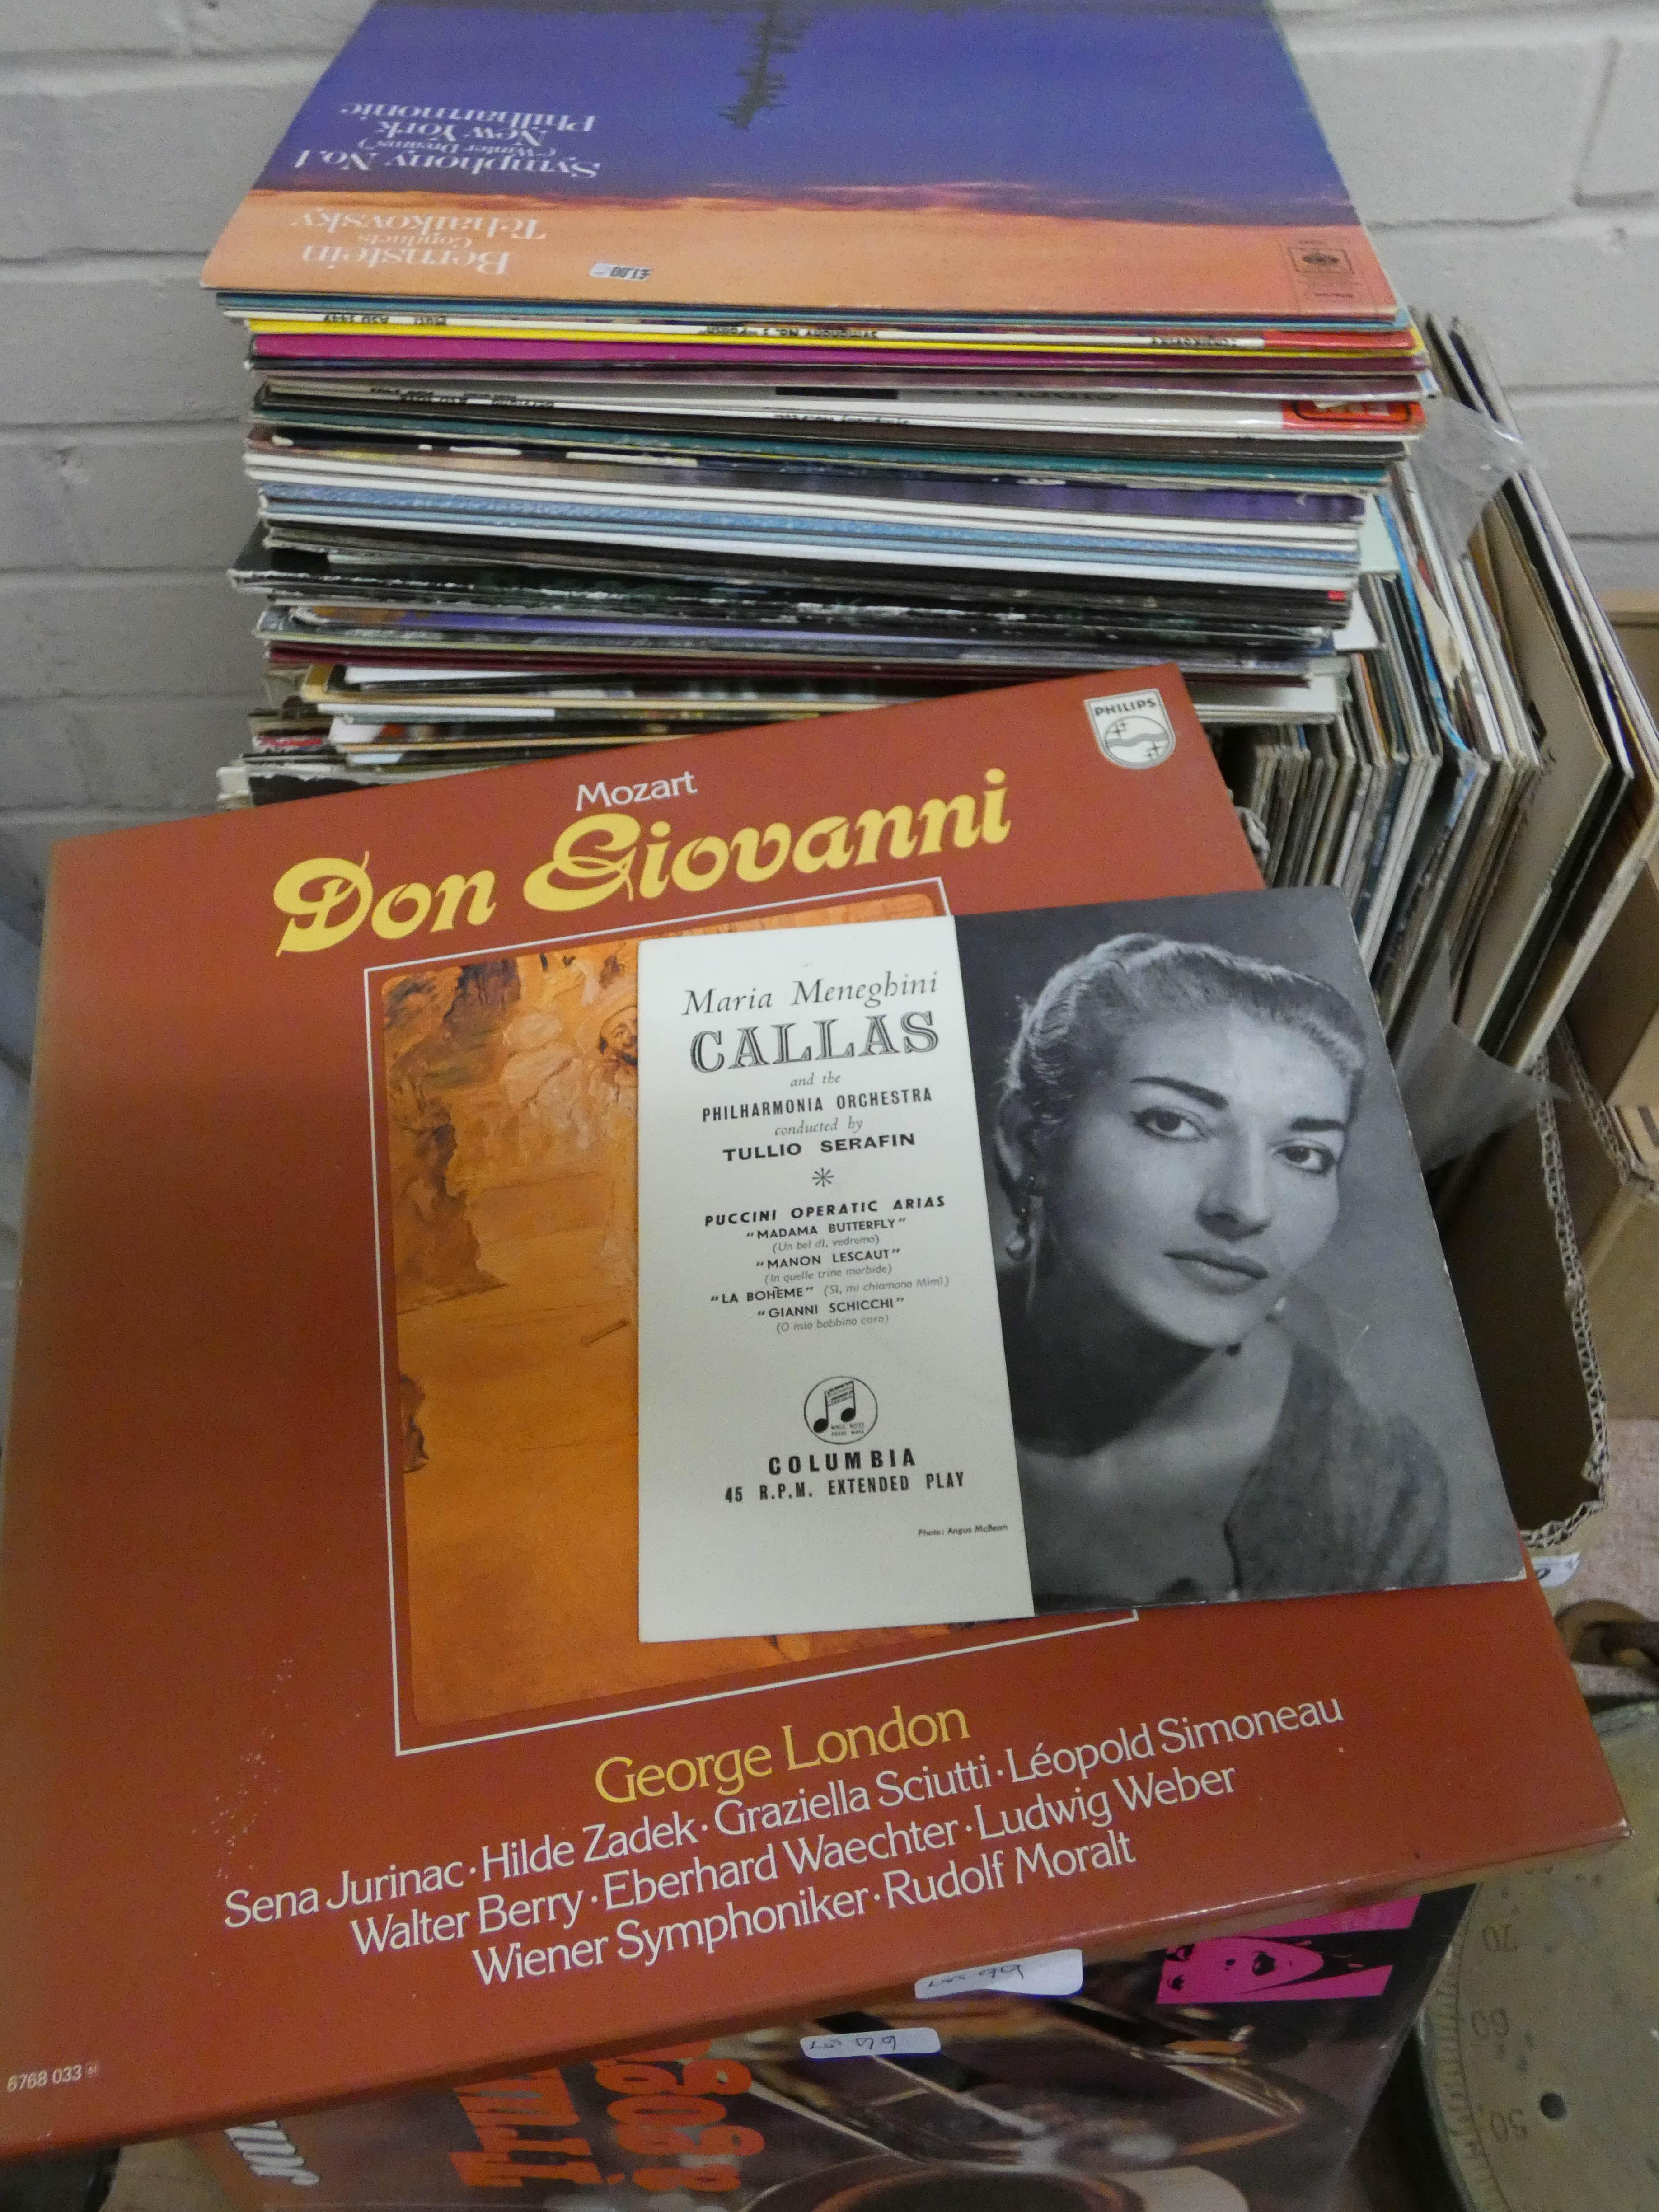 A large quantity of LP vinyl records,